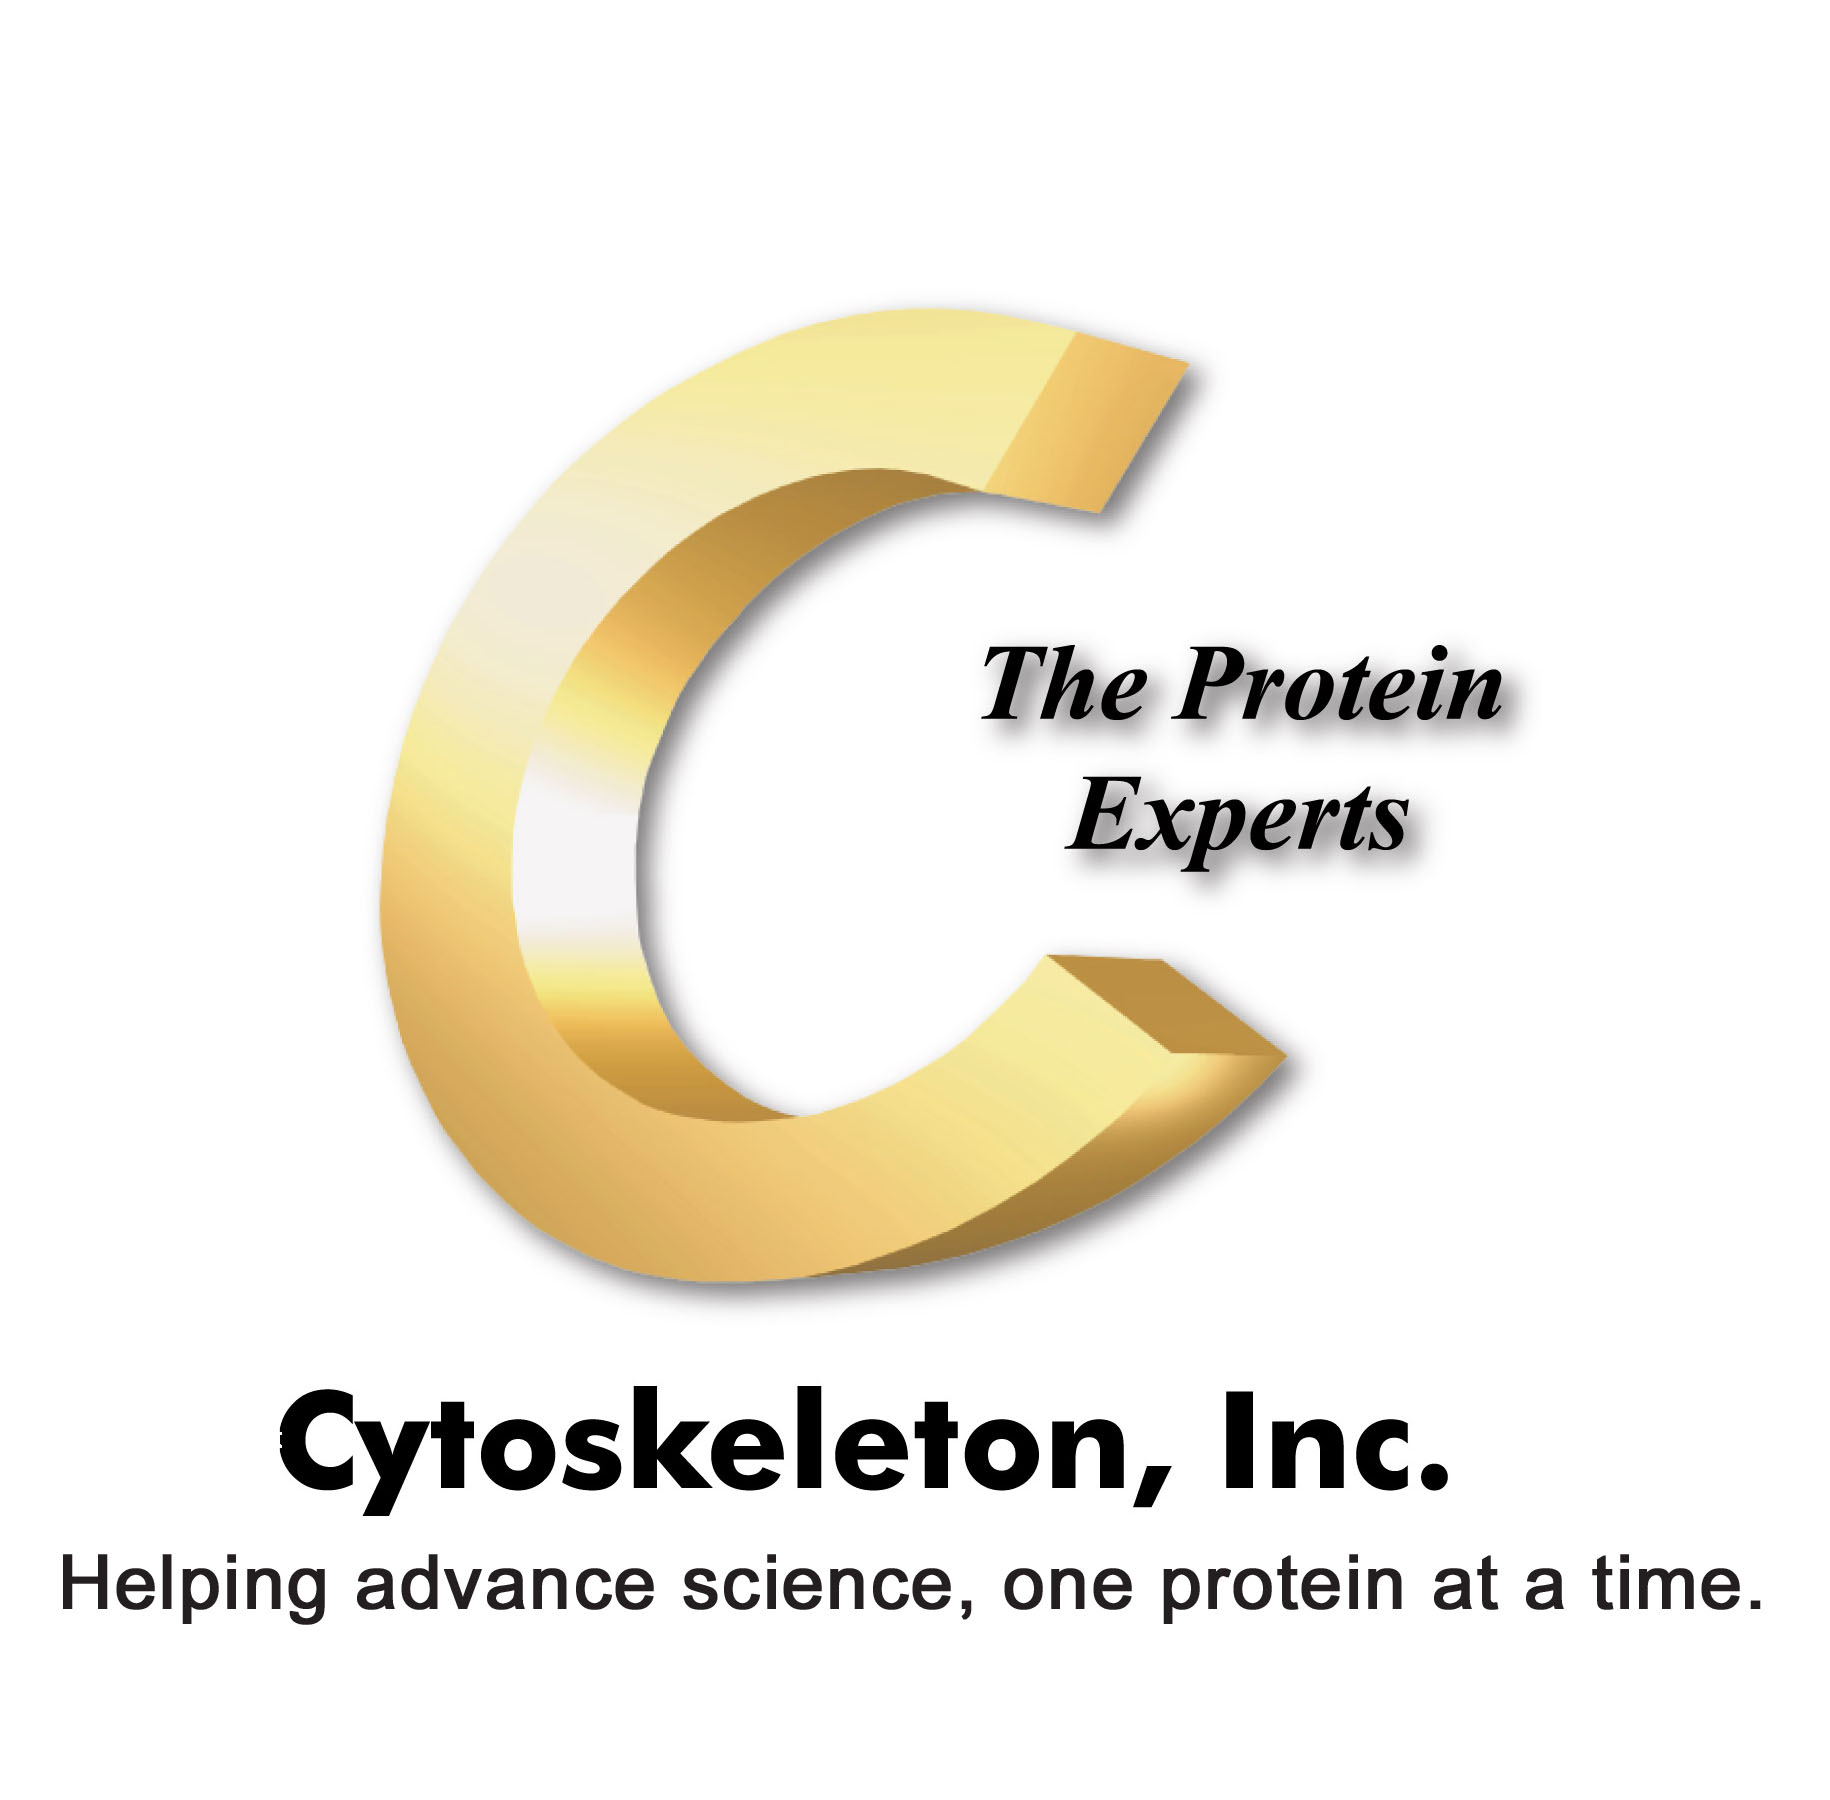 090324Cytoskeleton Gold C logo (one protein).jpg